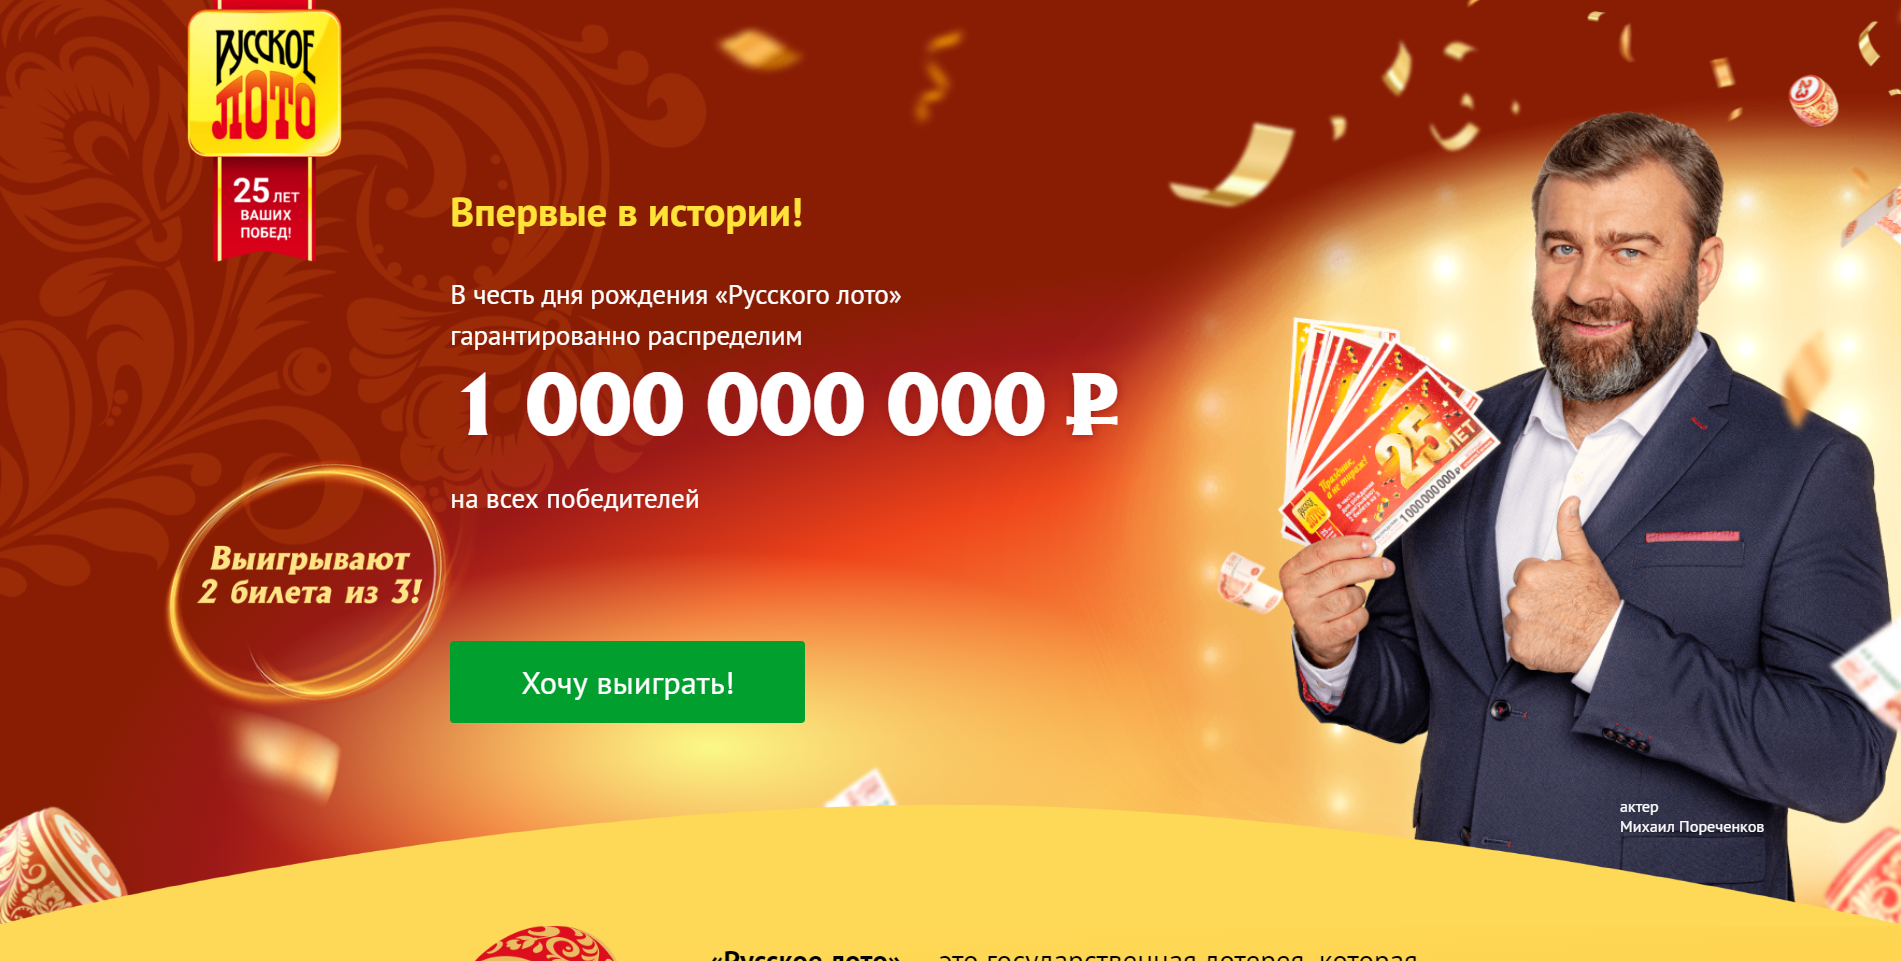 Пореченков столото best online casino deals powered by phpbb